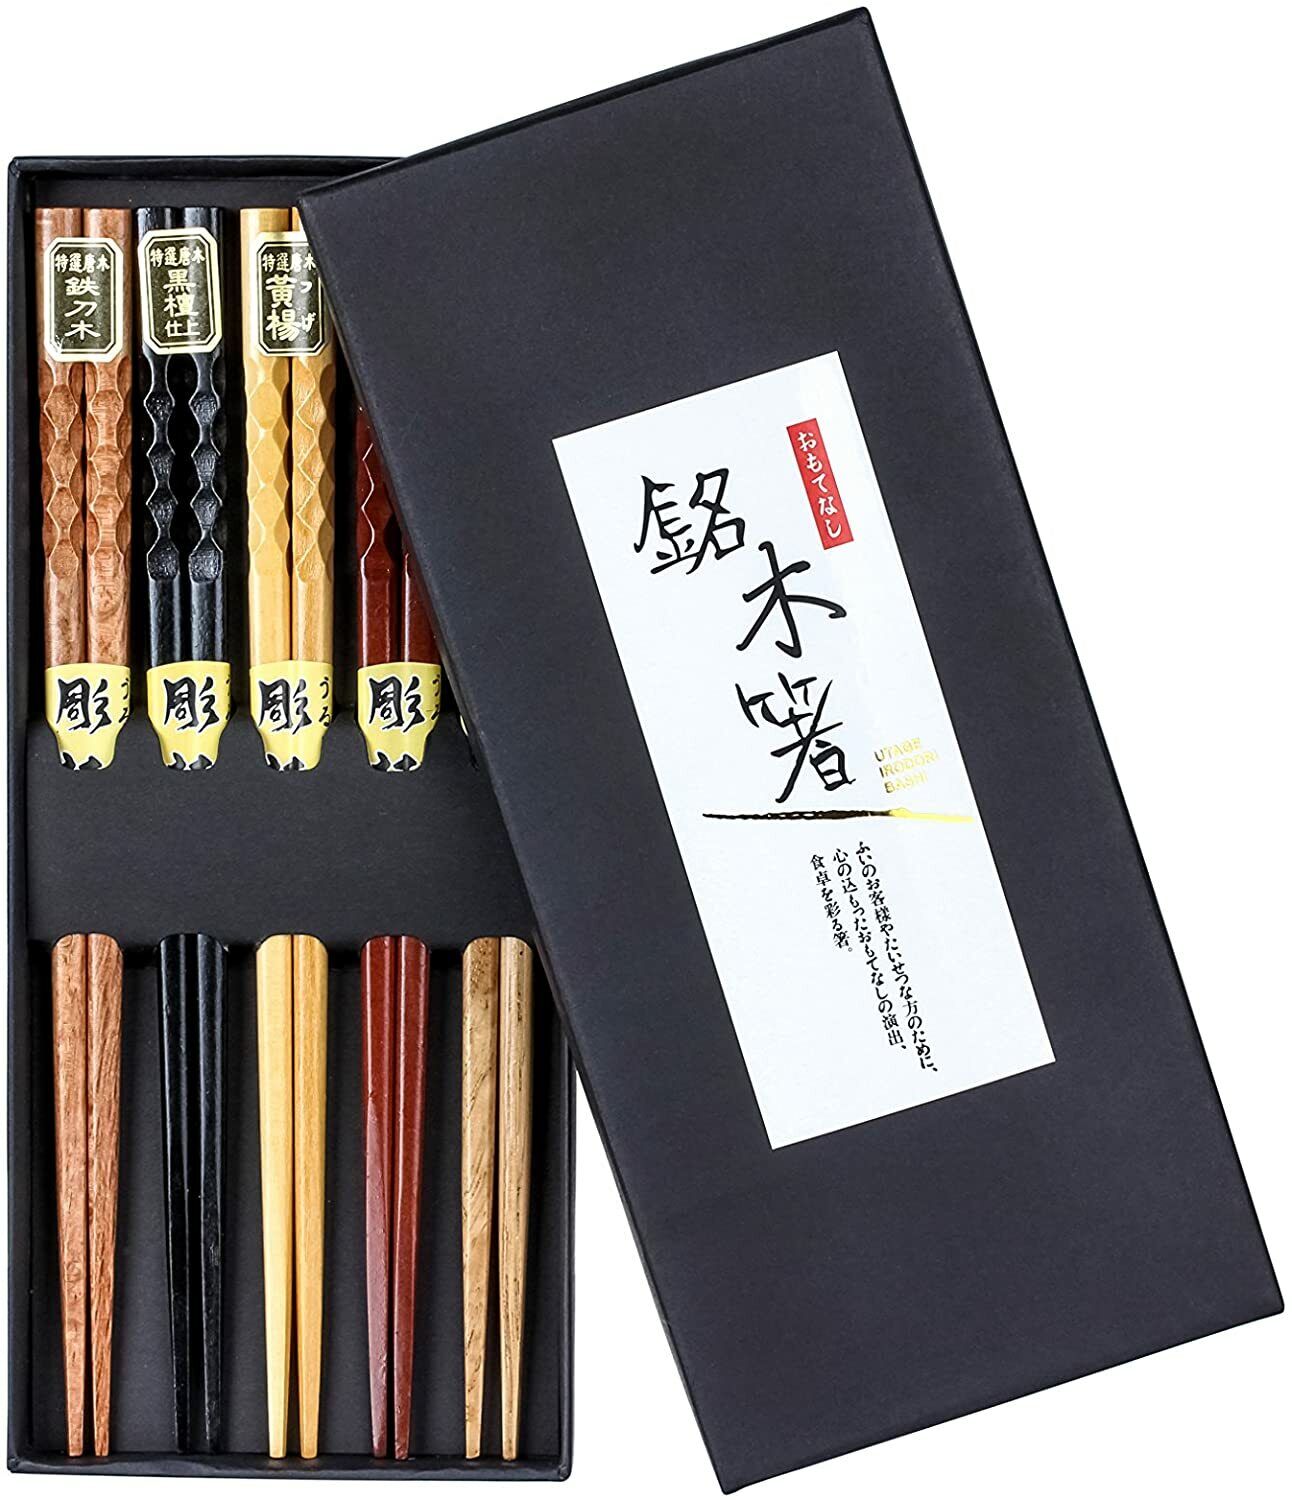 Bamboo Chopsticks Reusable Natural & Organic [5 Pairs] Gift Set dishwasher Safe